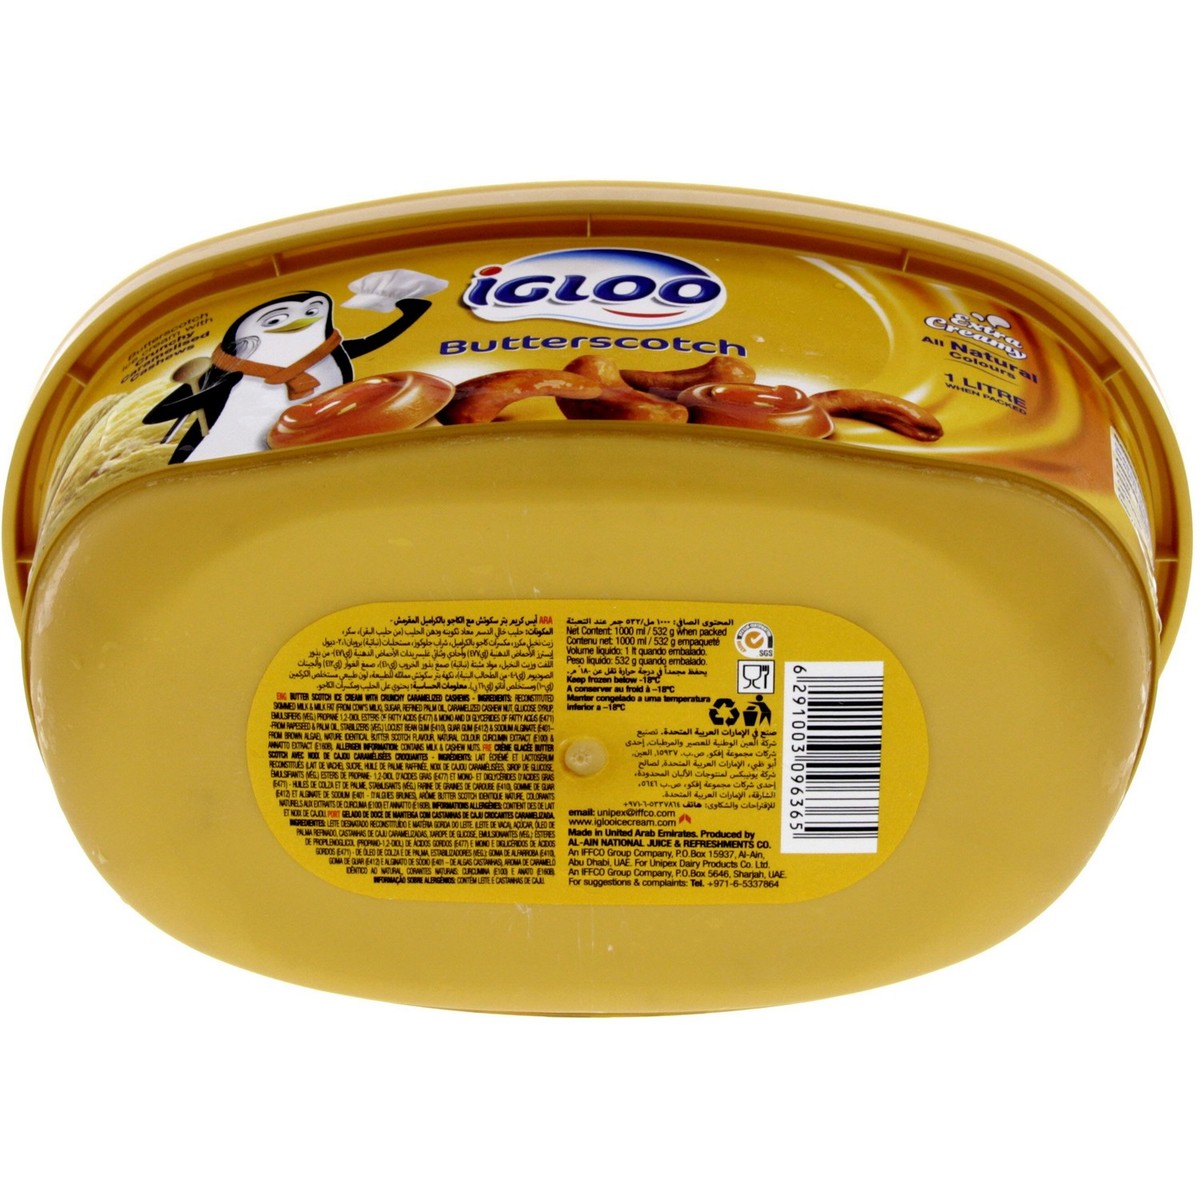 Igloo Butterscotch Ice Cream 1 Litre